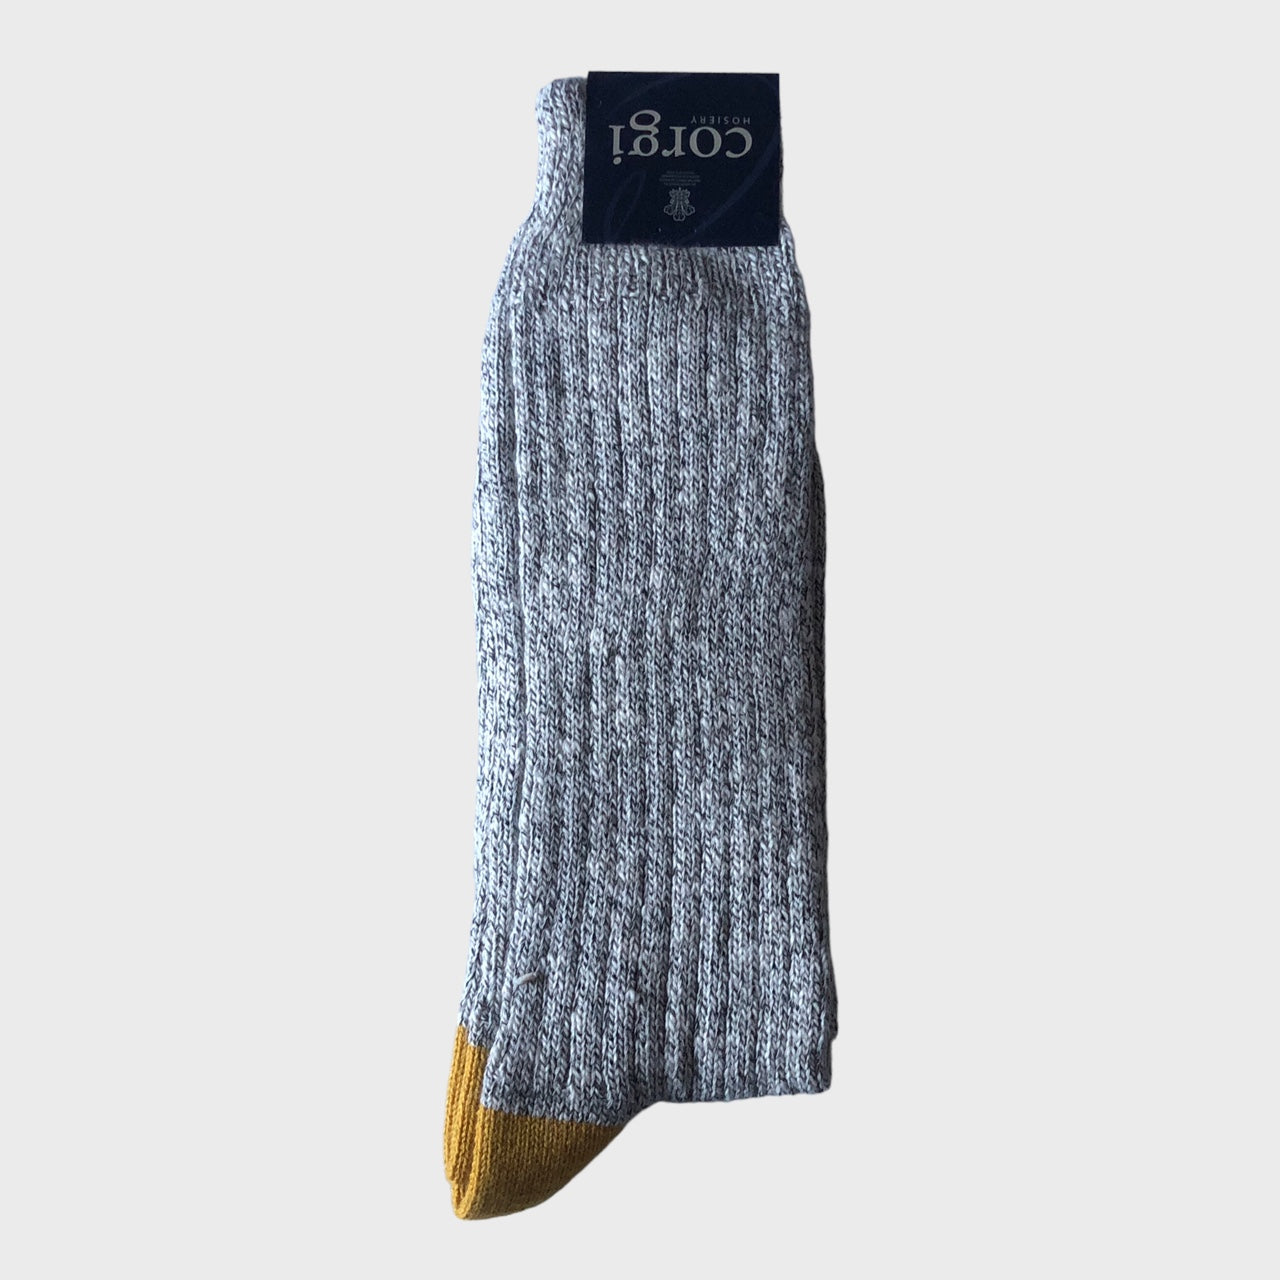 Corgi - Finest Pure Cotton Light Grey Socks